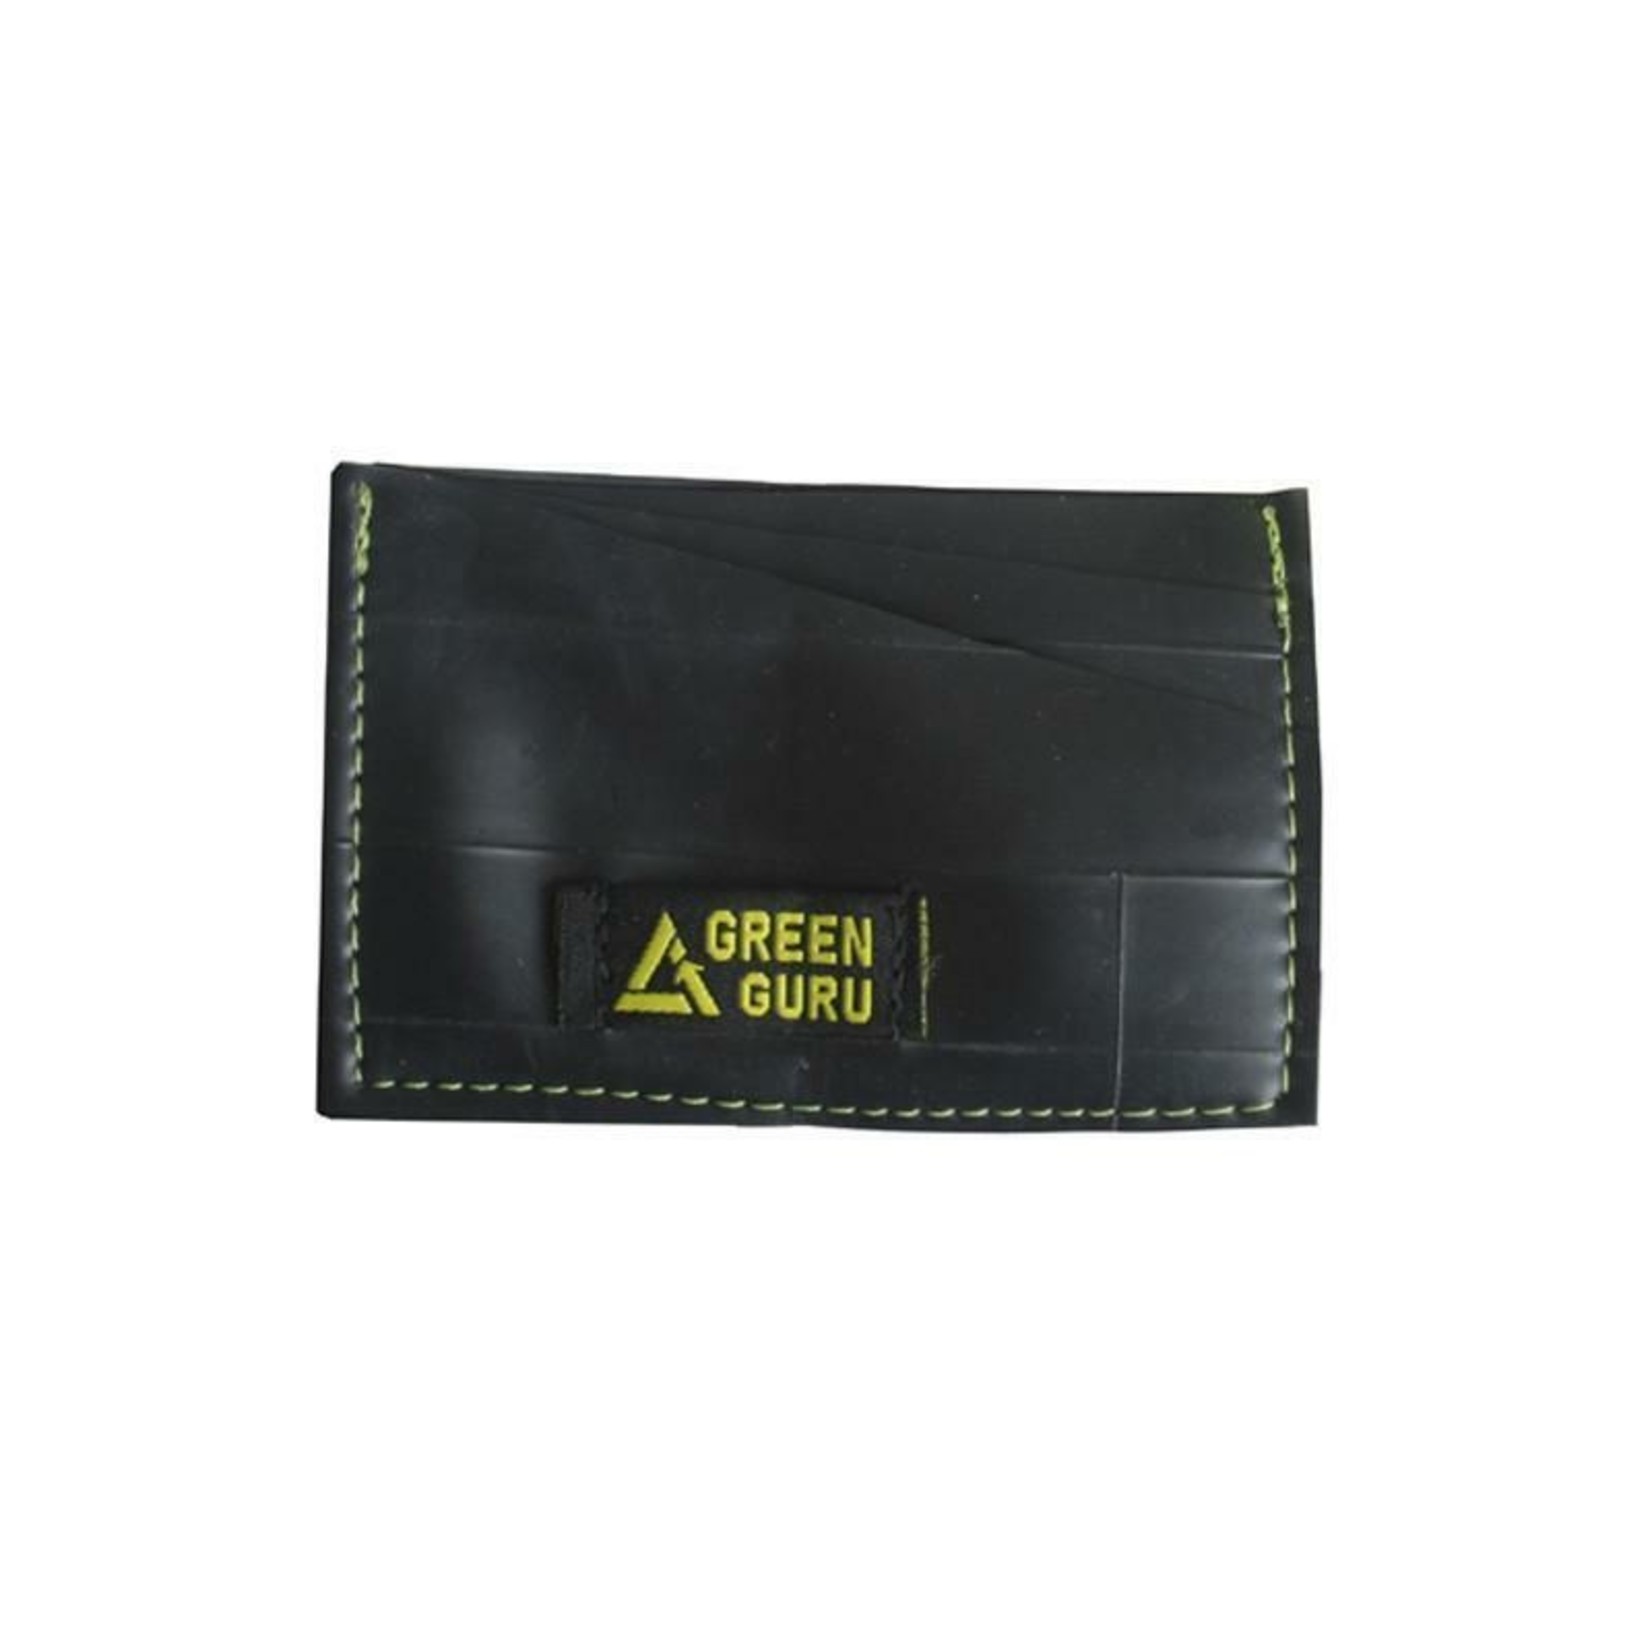 Green Guru - ID Card Wallet - Black